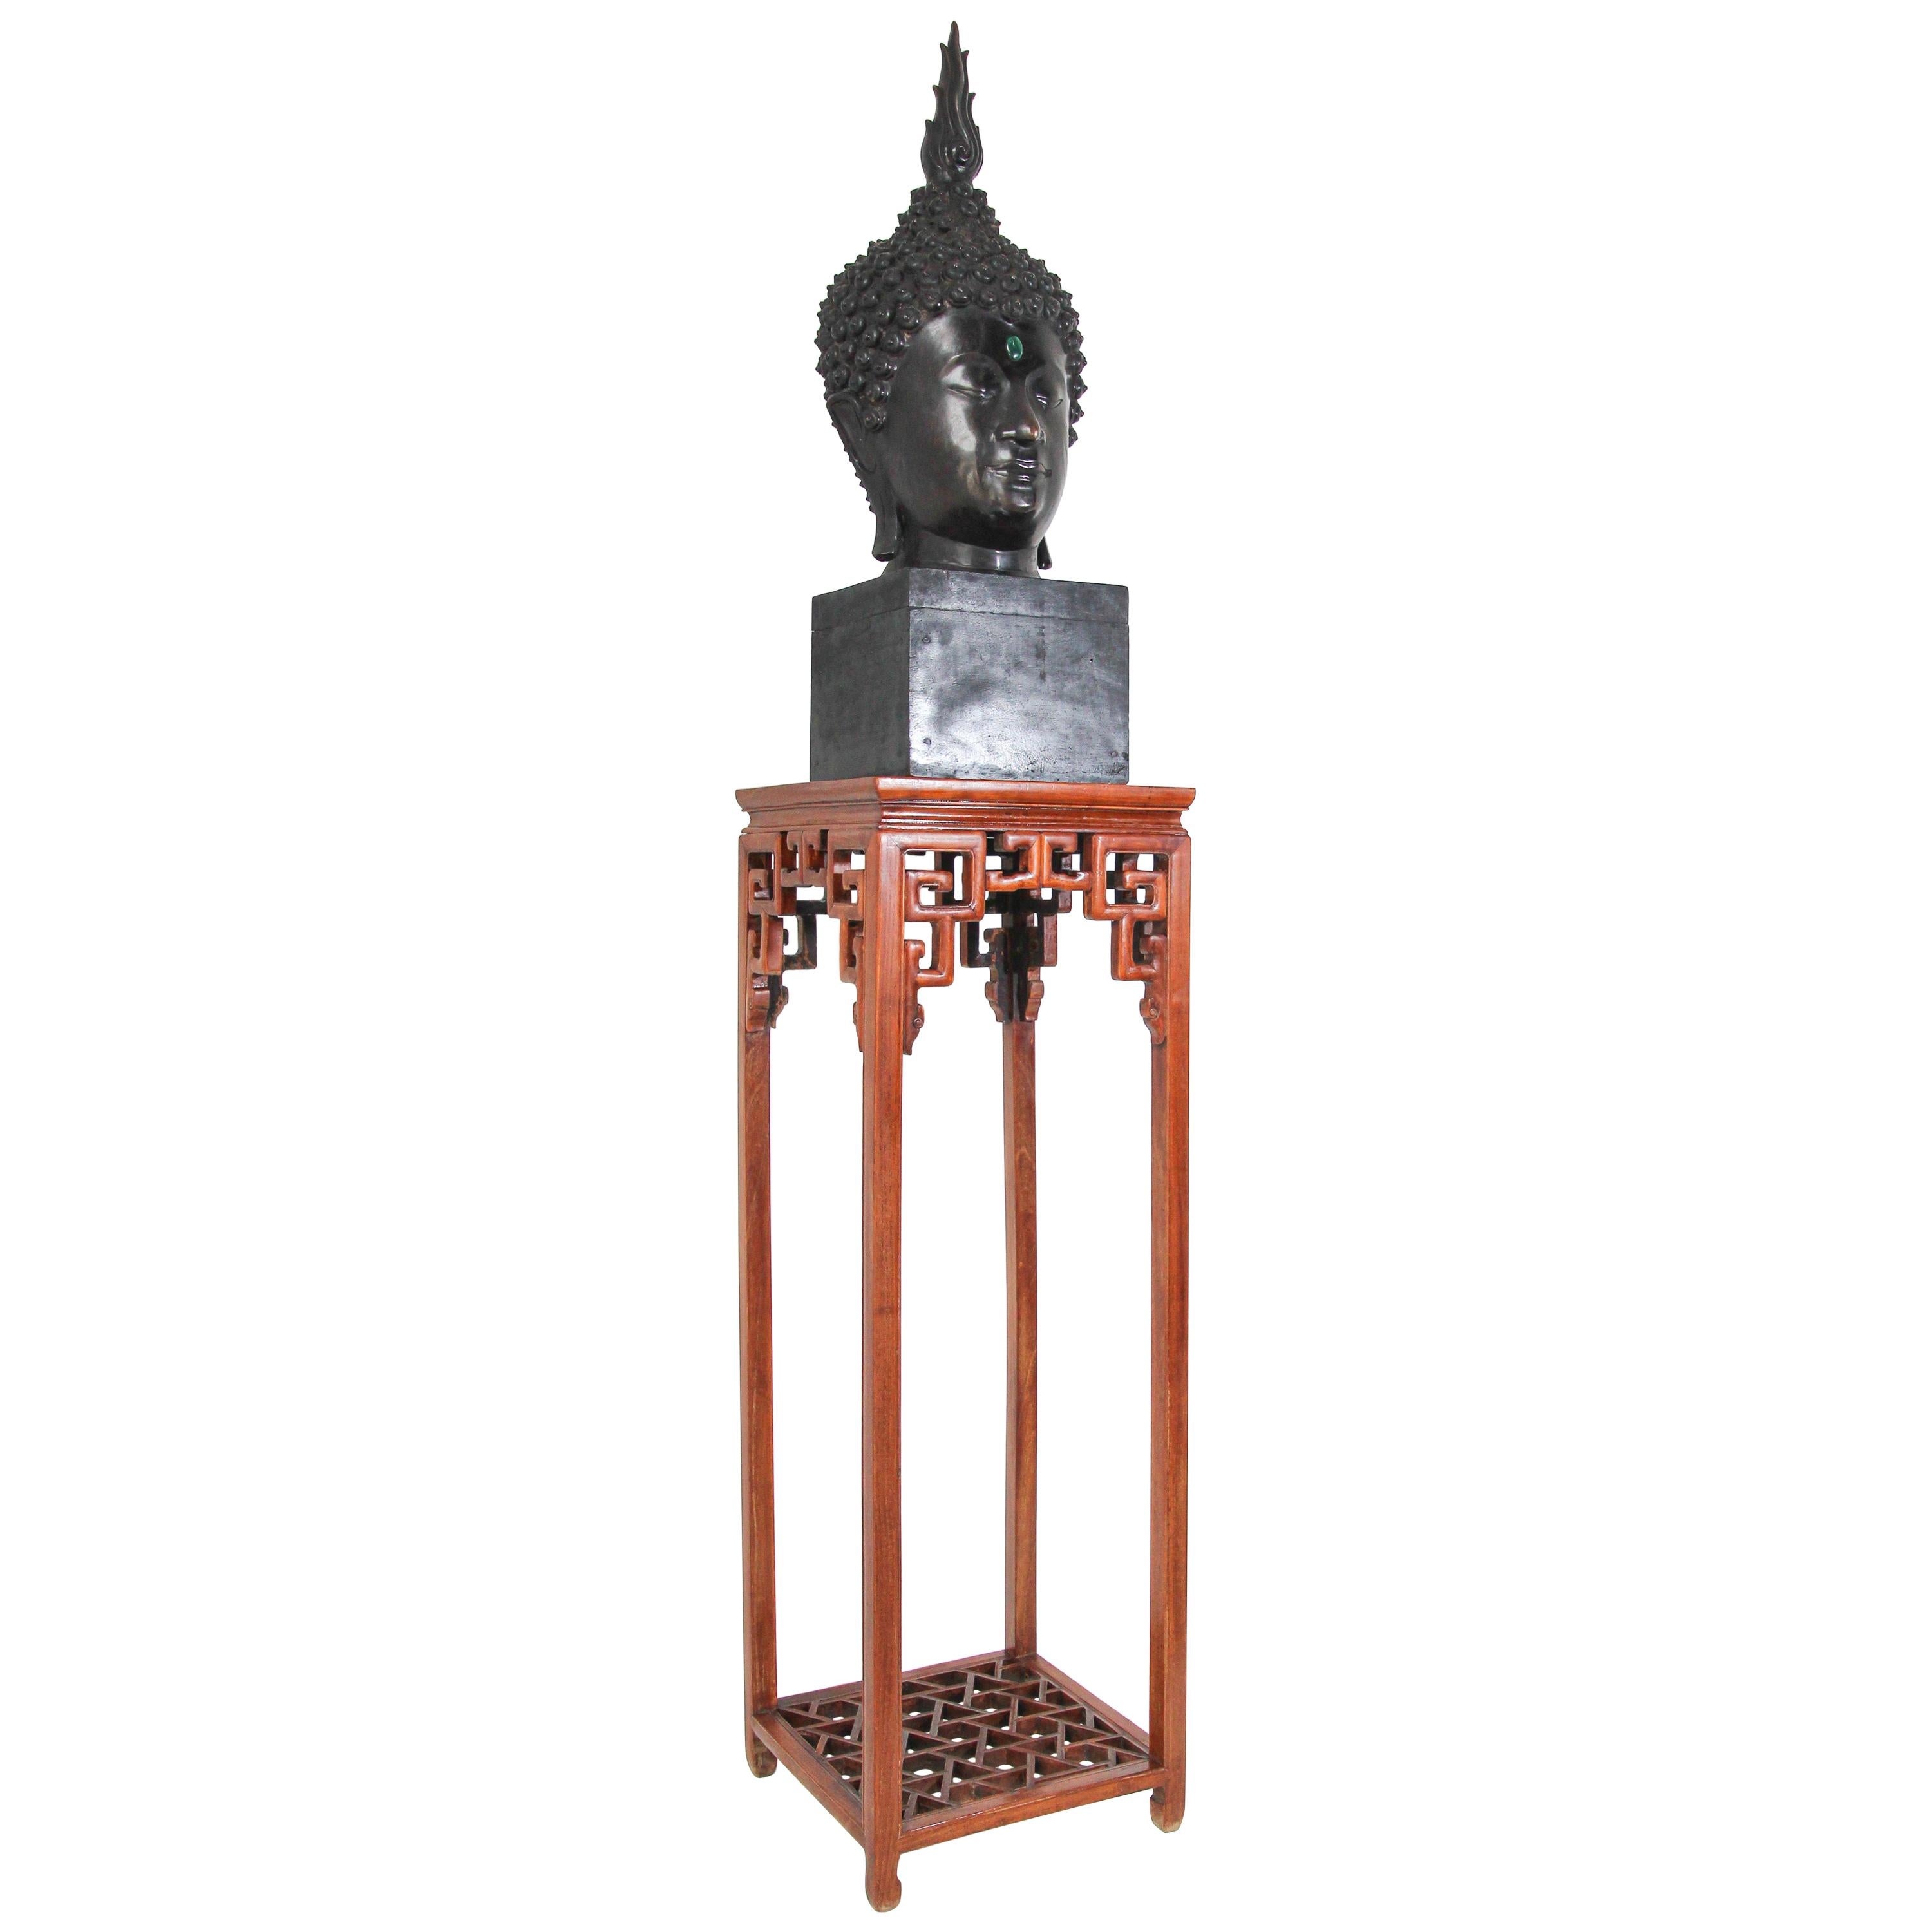 Impressive Bronze Head of Buddha on Pedestal